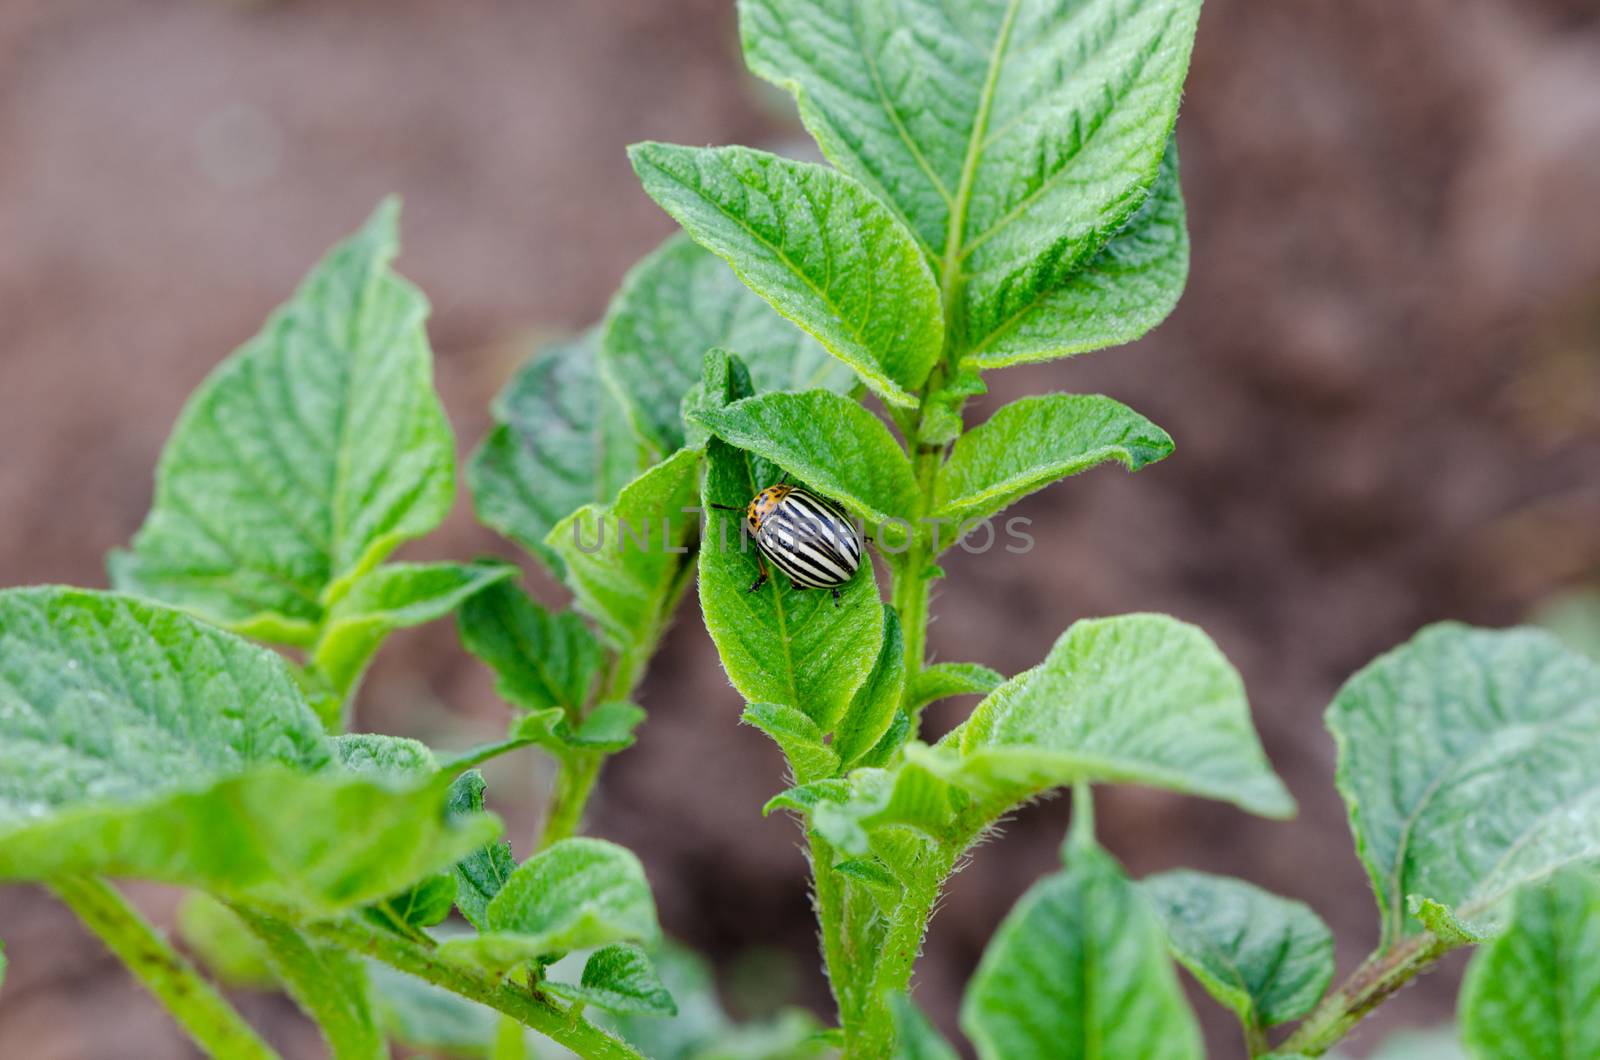 colorado beetle bug move on potato plant leaves by sauletas